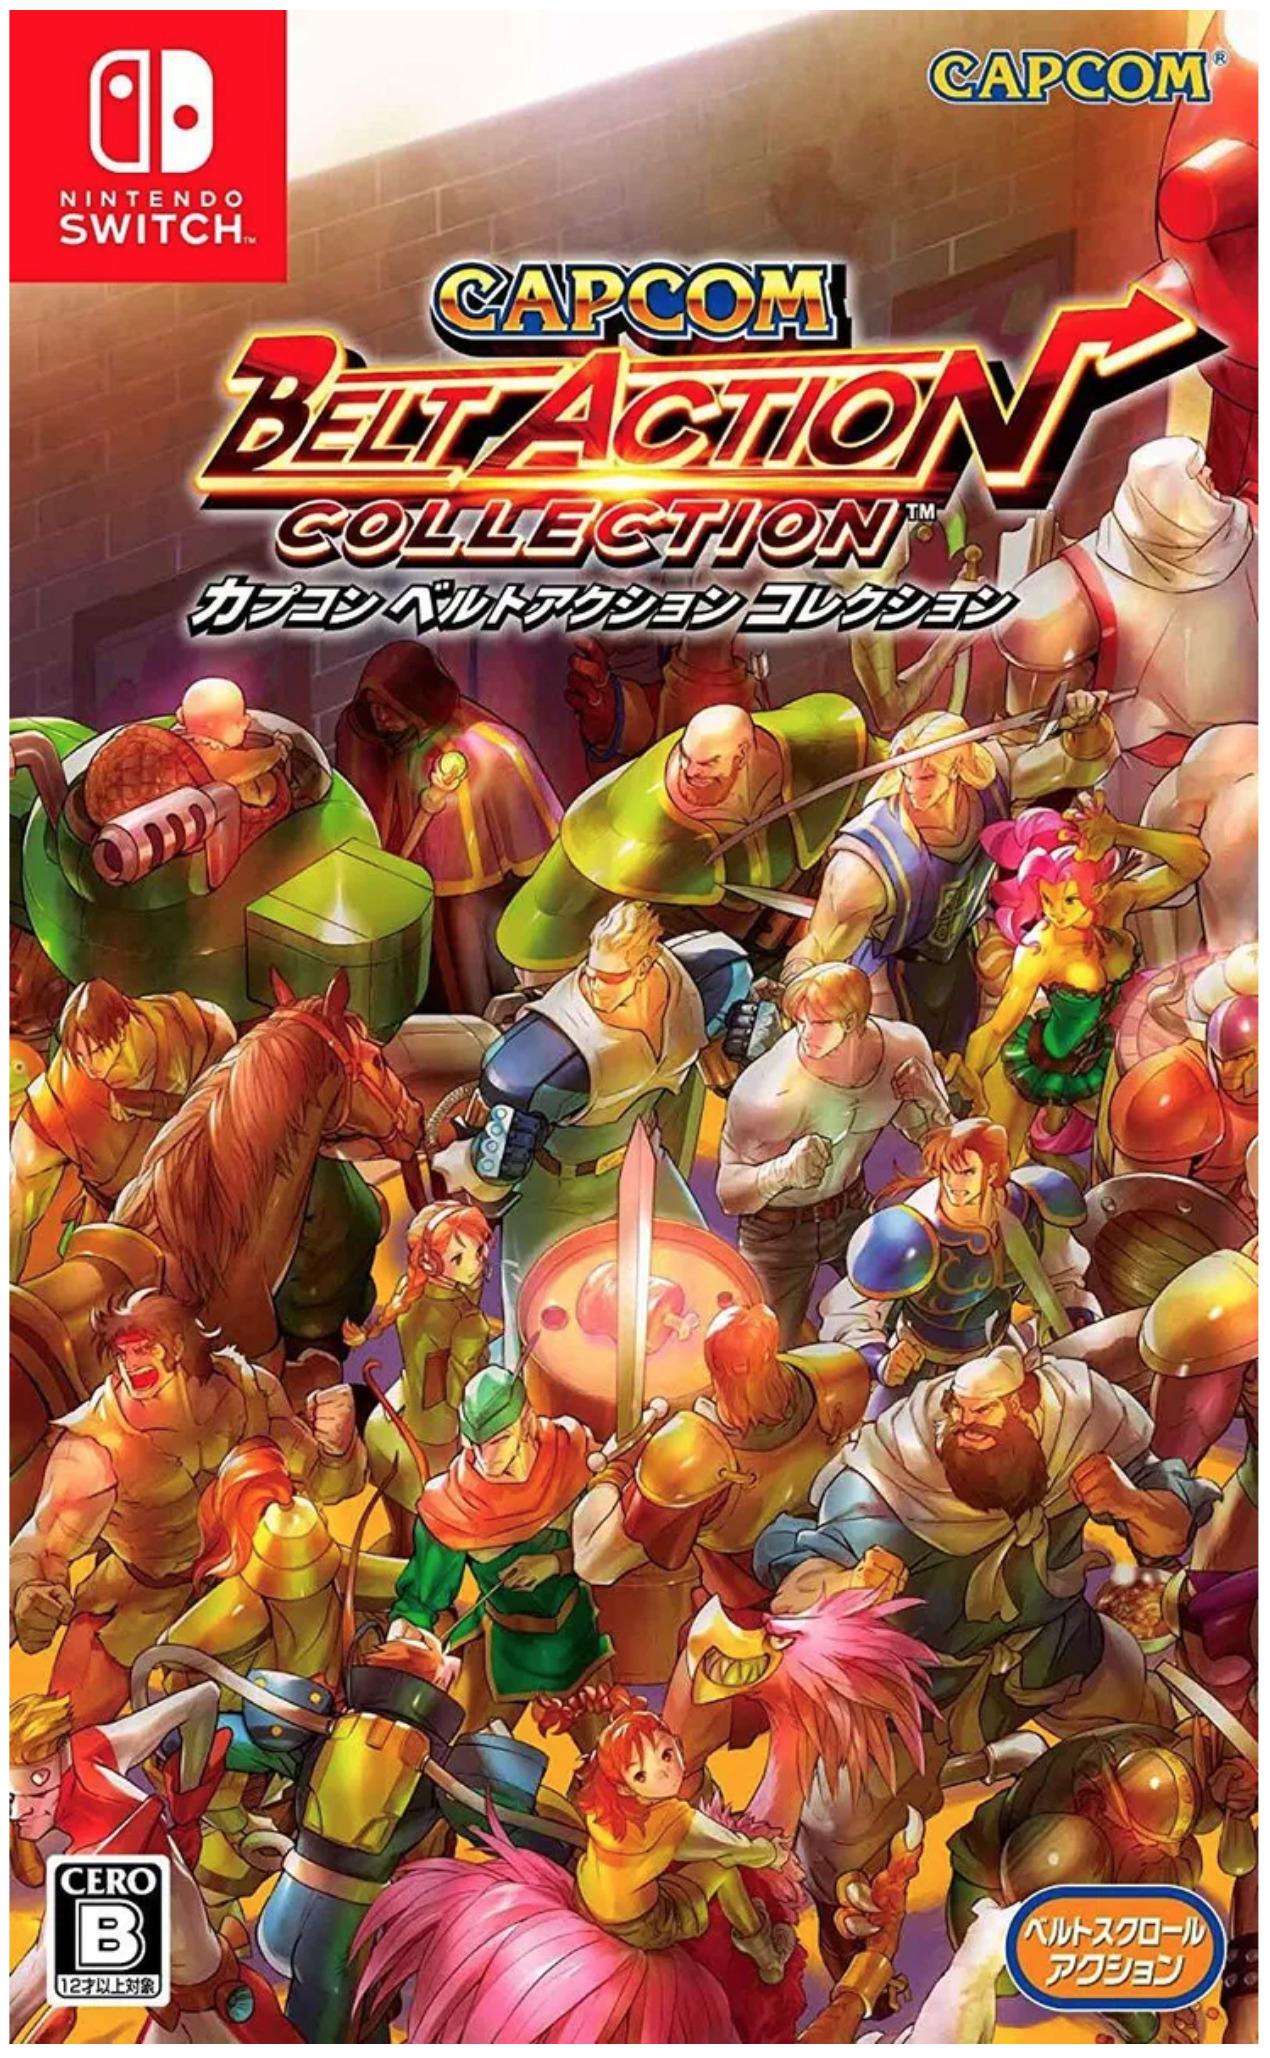 Capcom collection. Capcom игры. Capcom Switch. Capcom Belt Action collection. Капком файтинг коллекшн на Нинтендо свитч.